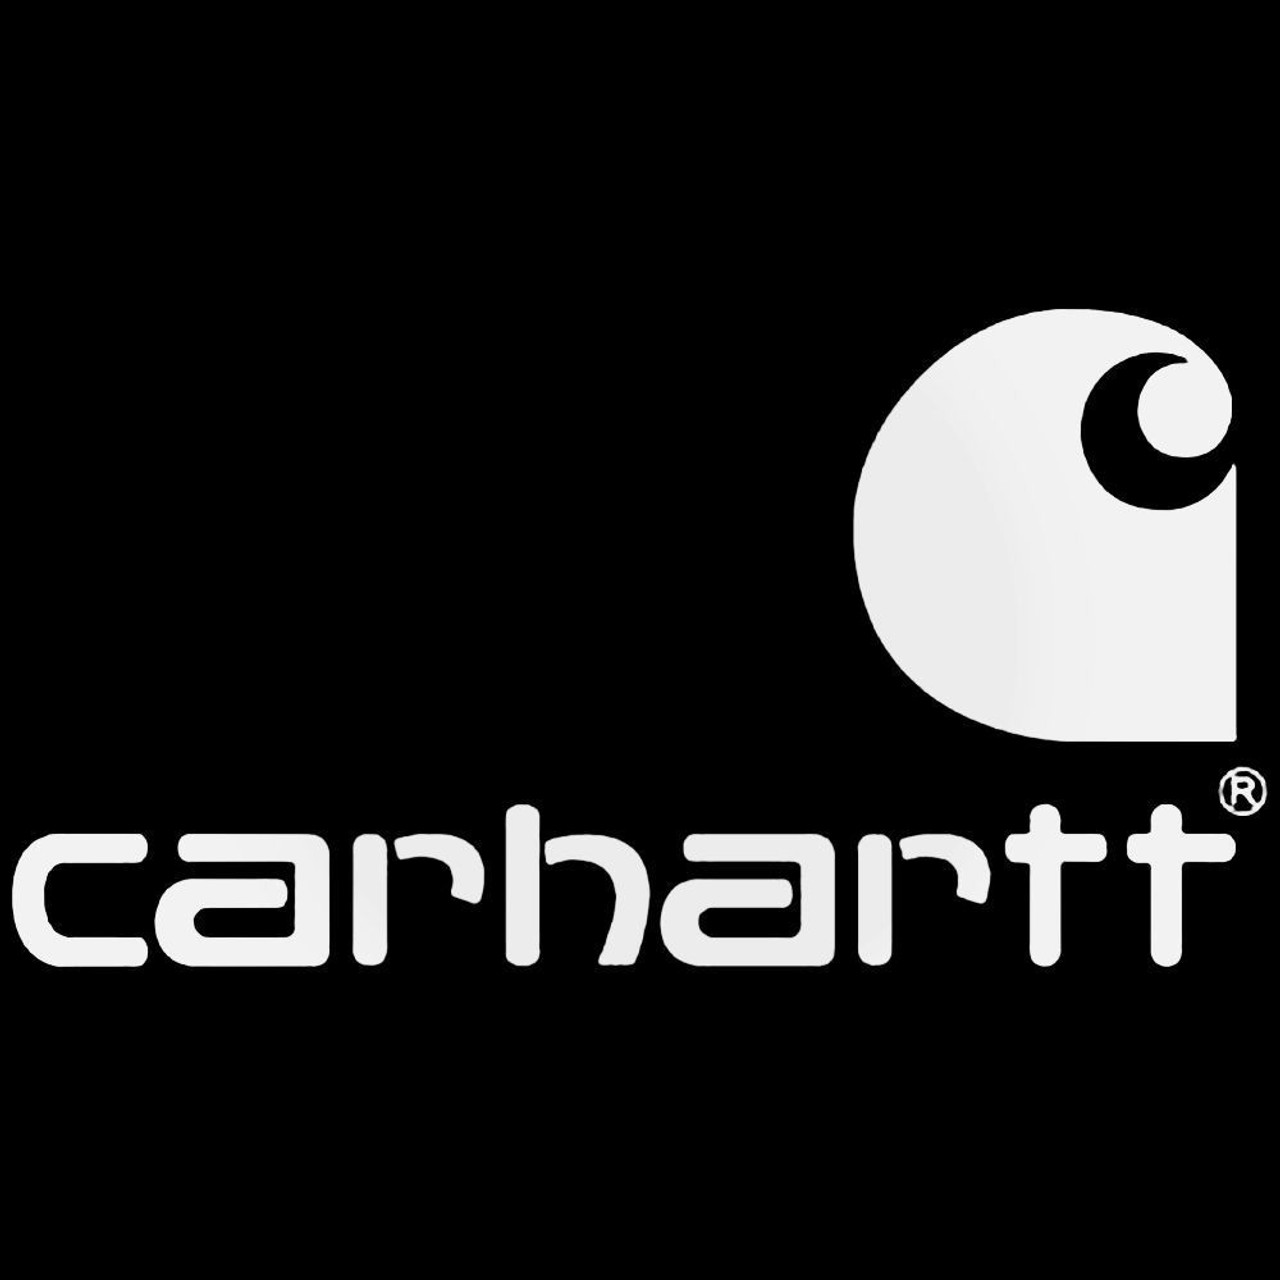 Carhartt Black Logo Vector Aftermarket Decal Sticker